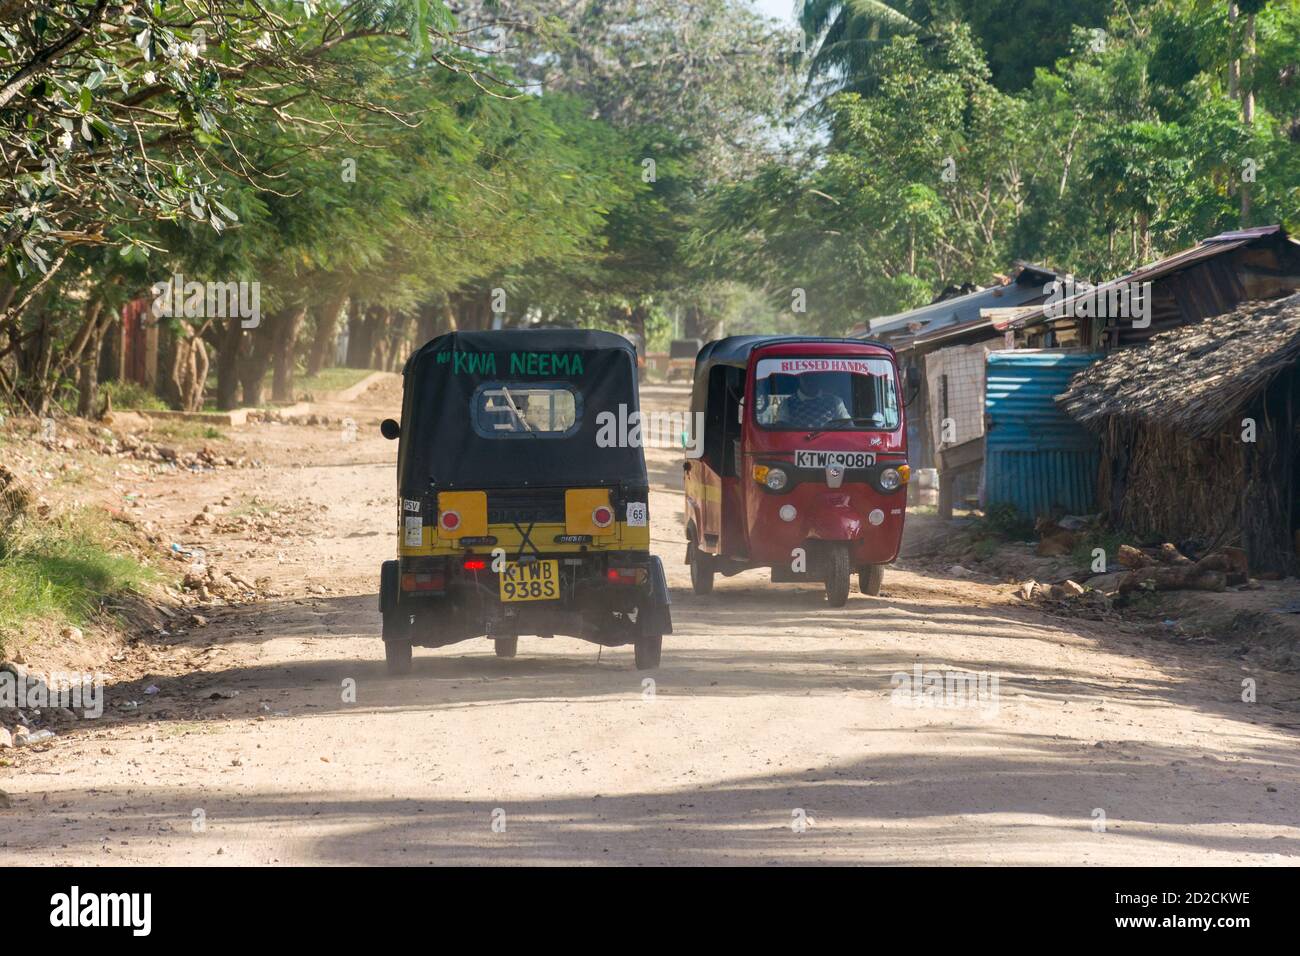 Tuk-tuks or auto rickshaws driving along a dusty beach road, Diani, Kenya Stock Photo